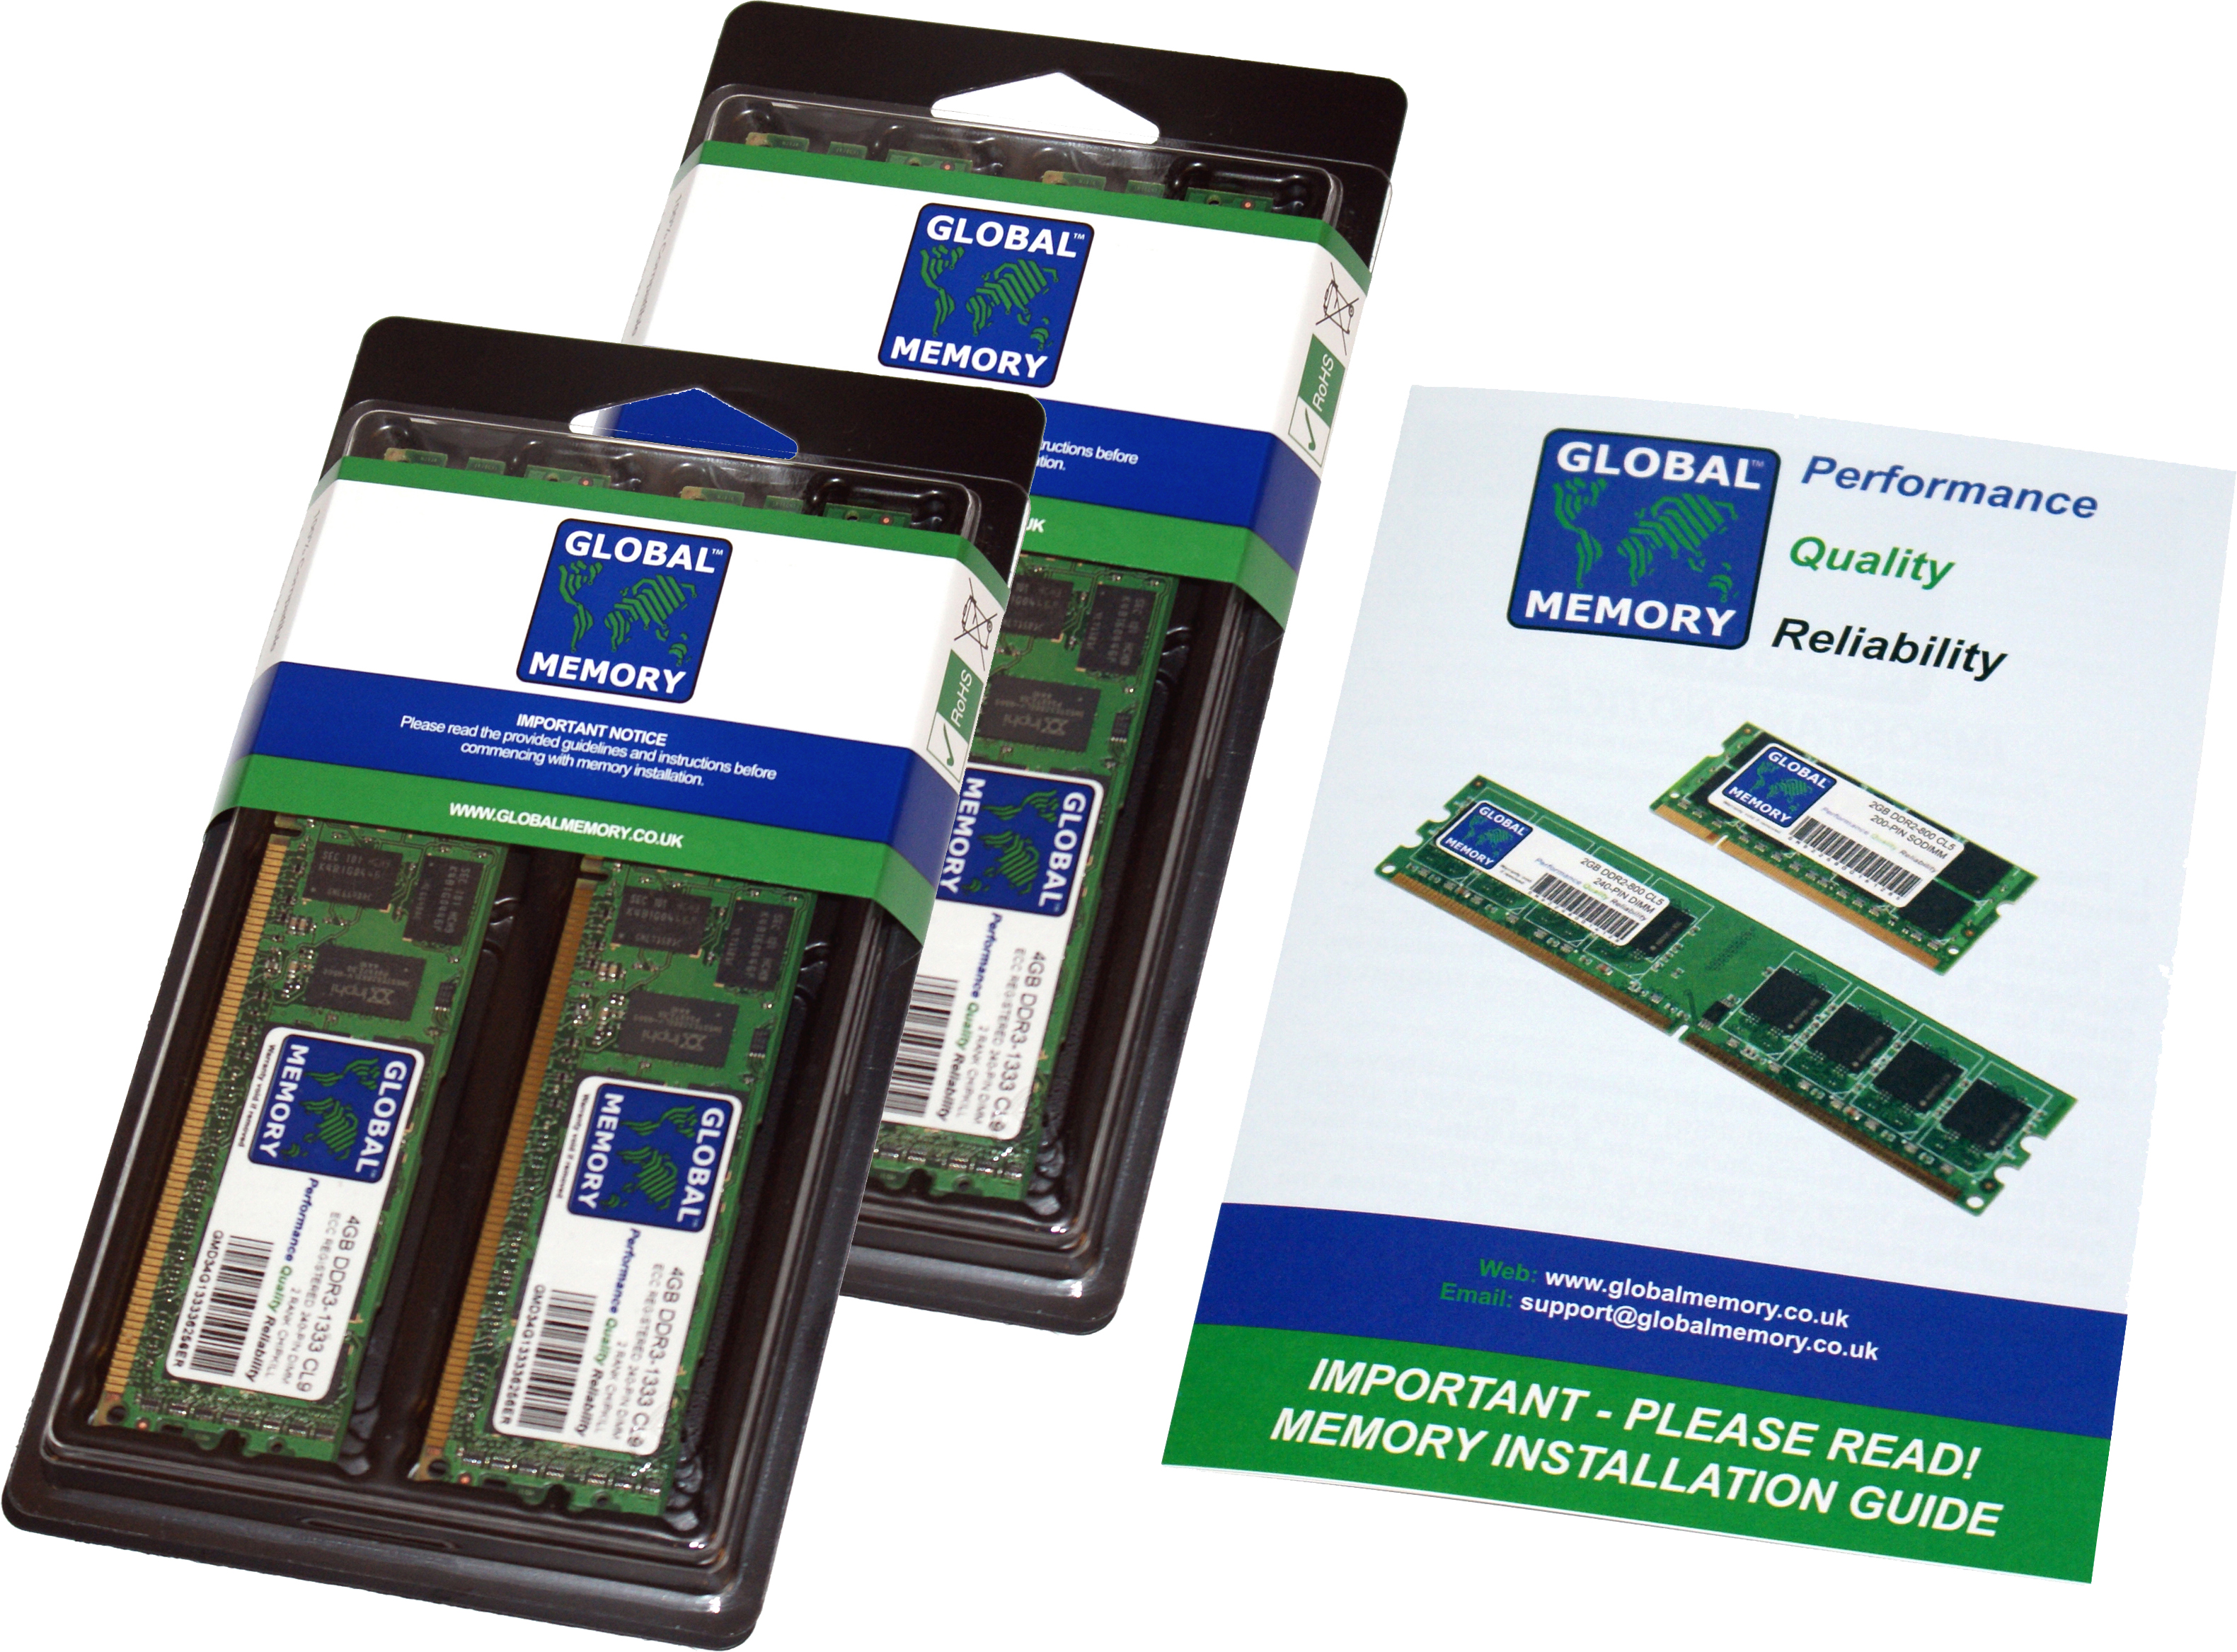 128GB (4 x 32GB) DDR4 2666MHz PC4-21300 288-PIN ECC REGISTERED DIMM (RDIMM) MEMORY RAM KIT FOR LENOVO SERVERS/WORKSTATIONS (8 RANK KIT CHIPKILL)